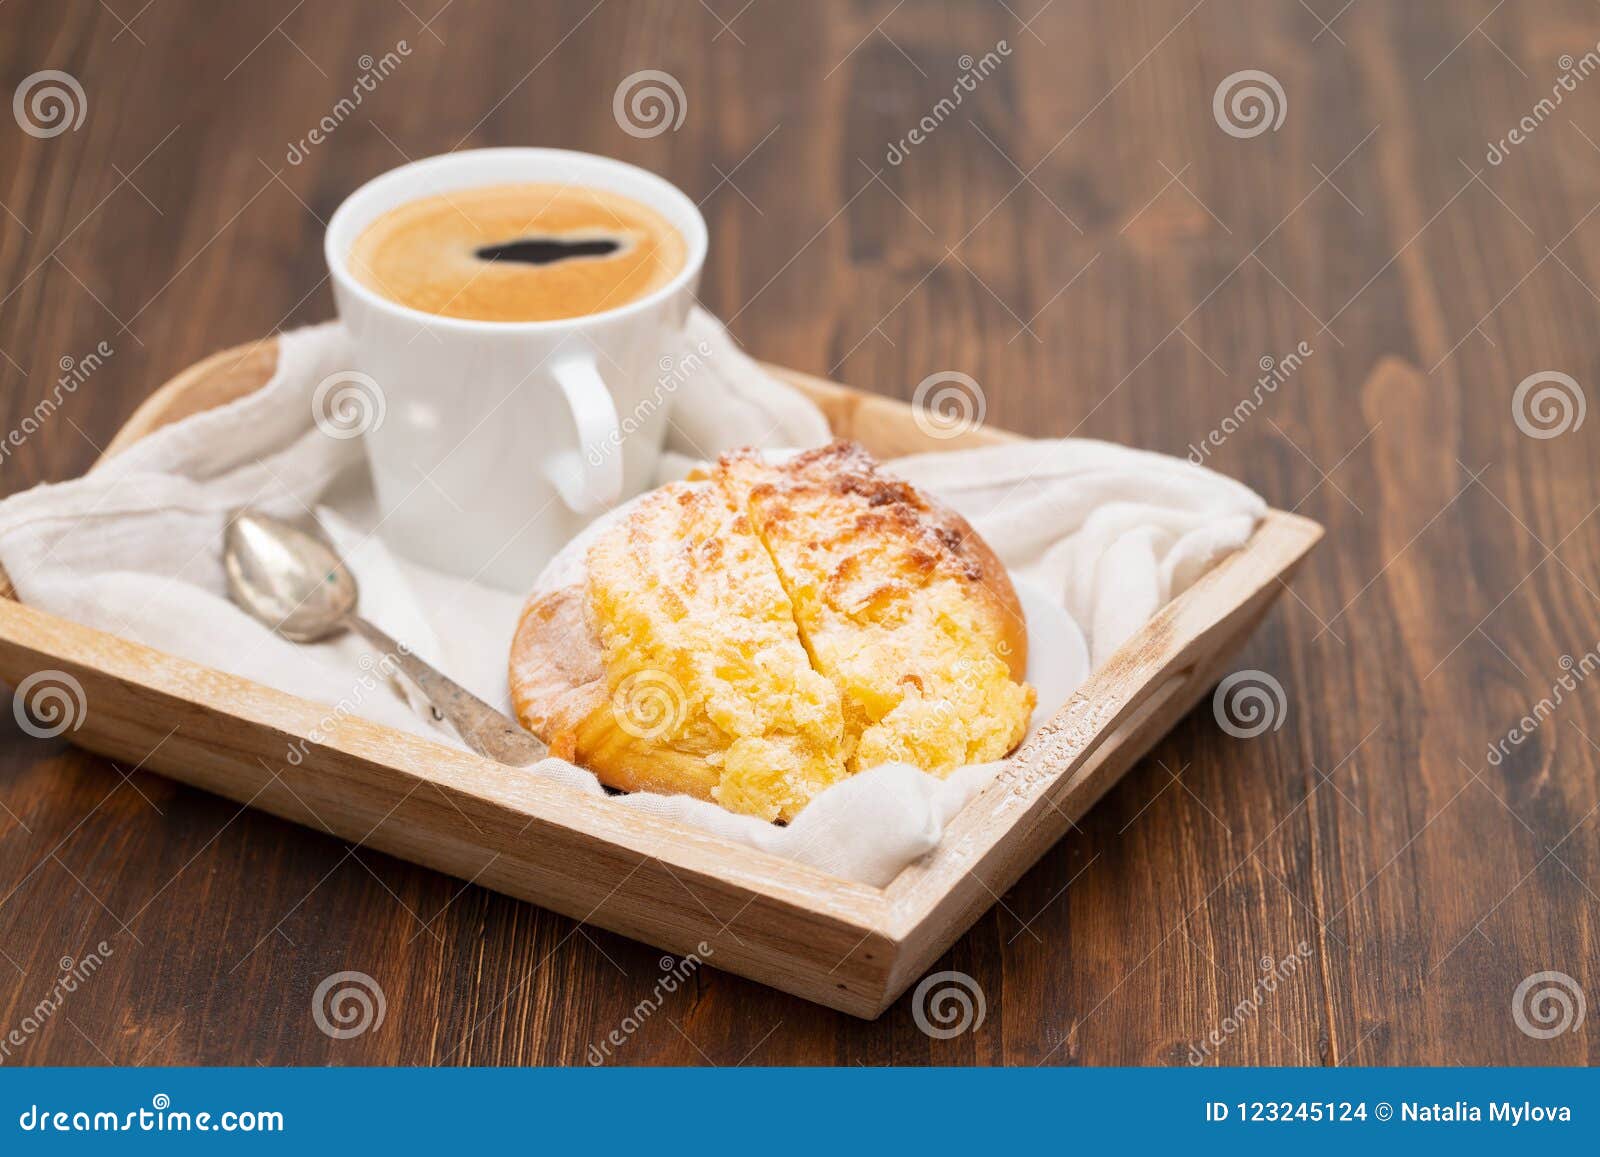 portuguese sweet bread pao de deus with cup of coffee